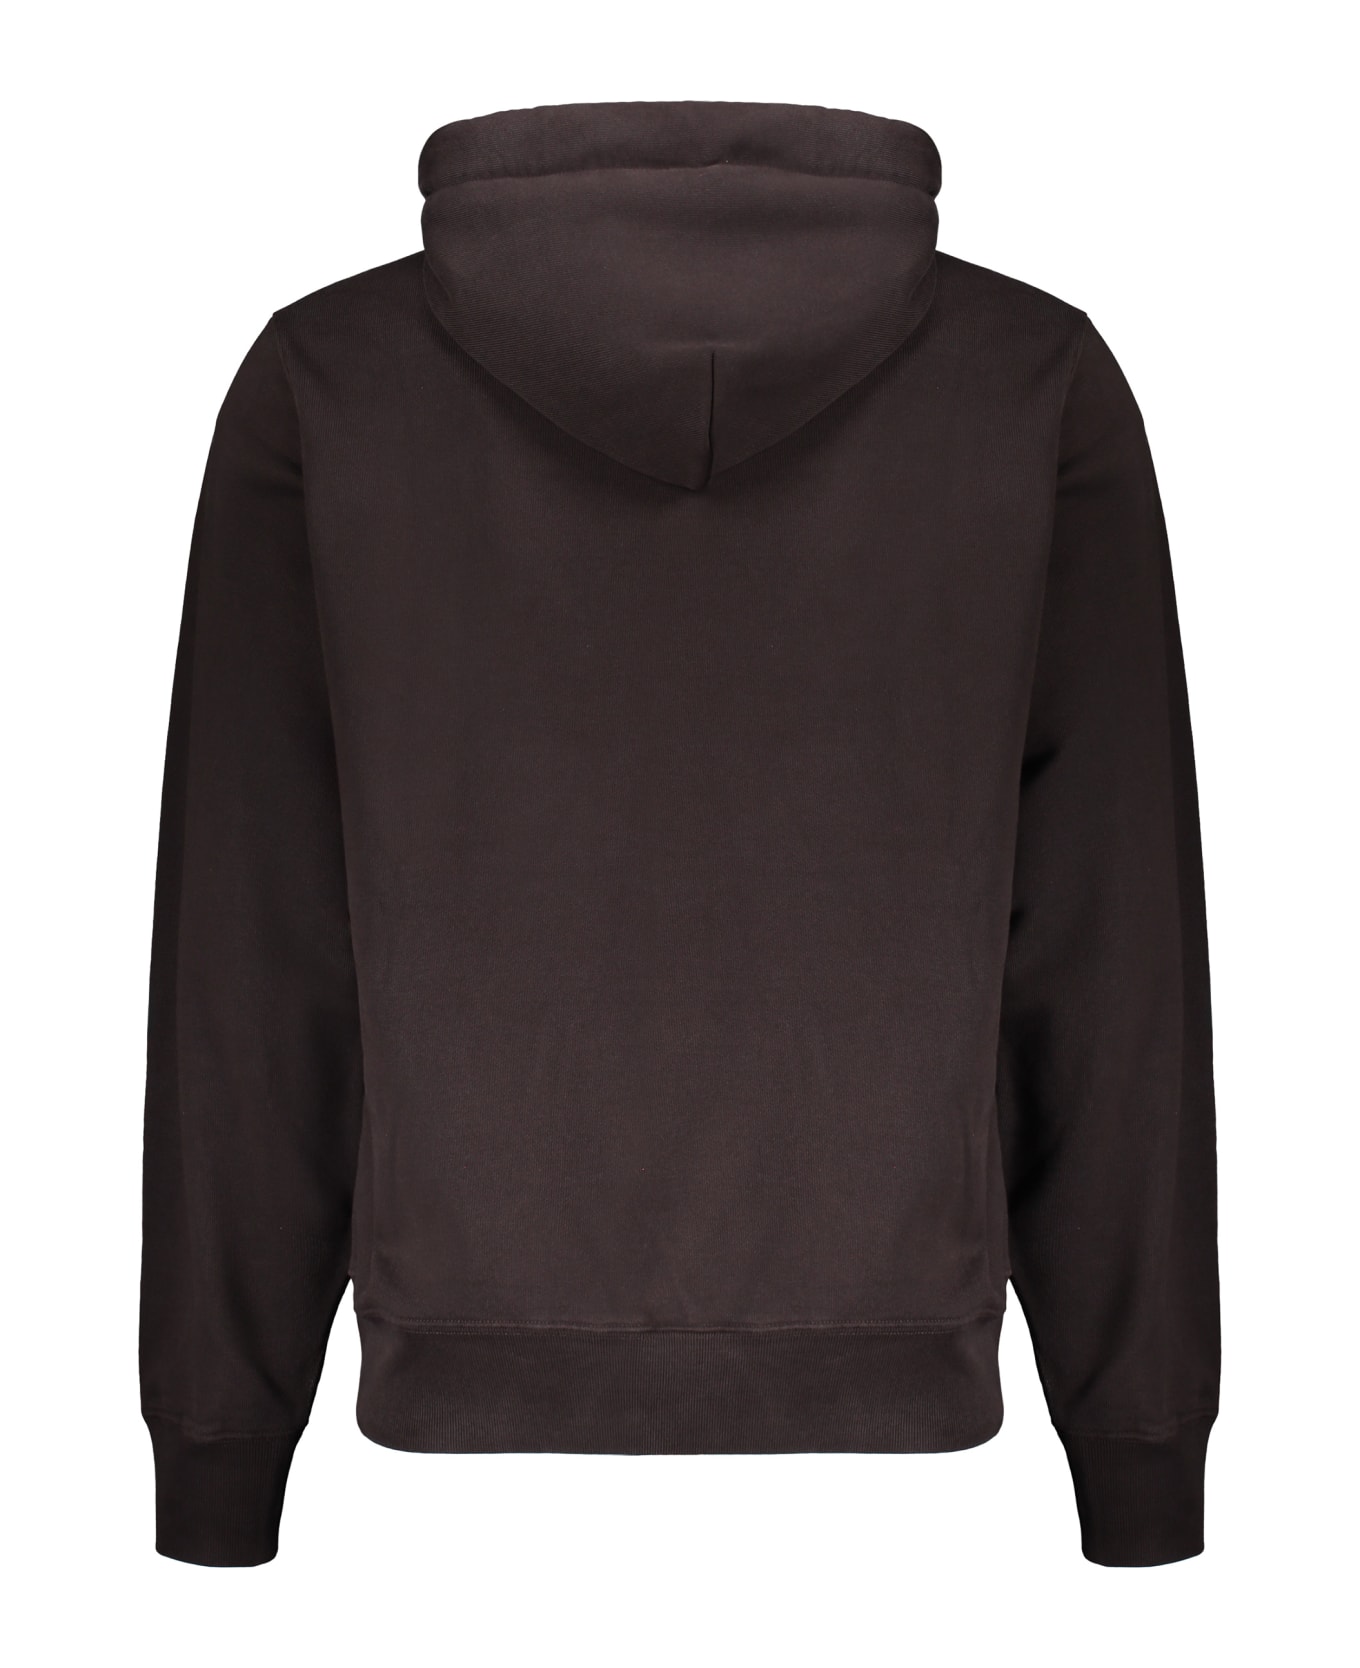 AMBUSH Hooded Sweatshirt - brown